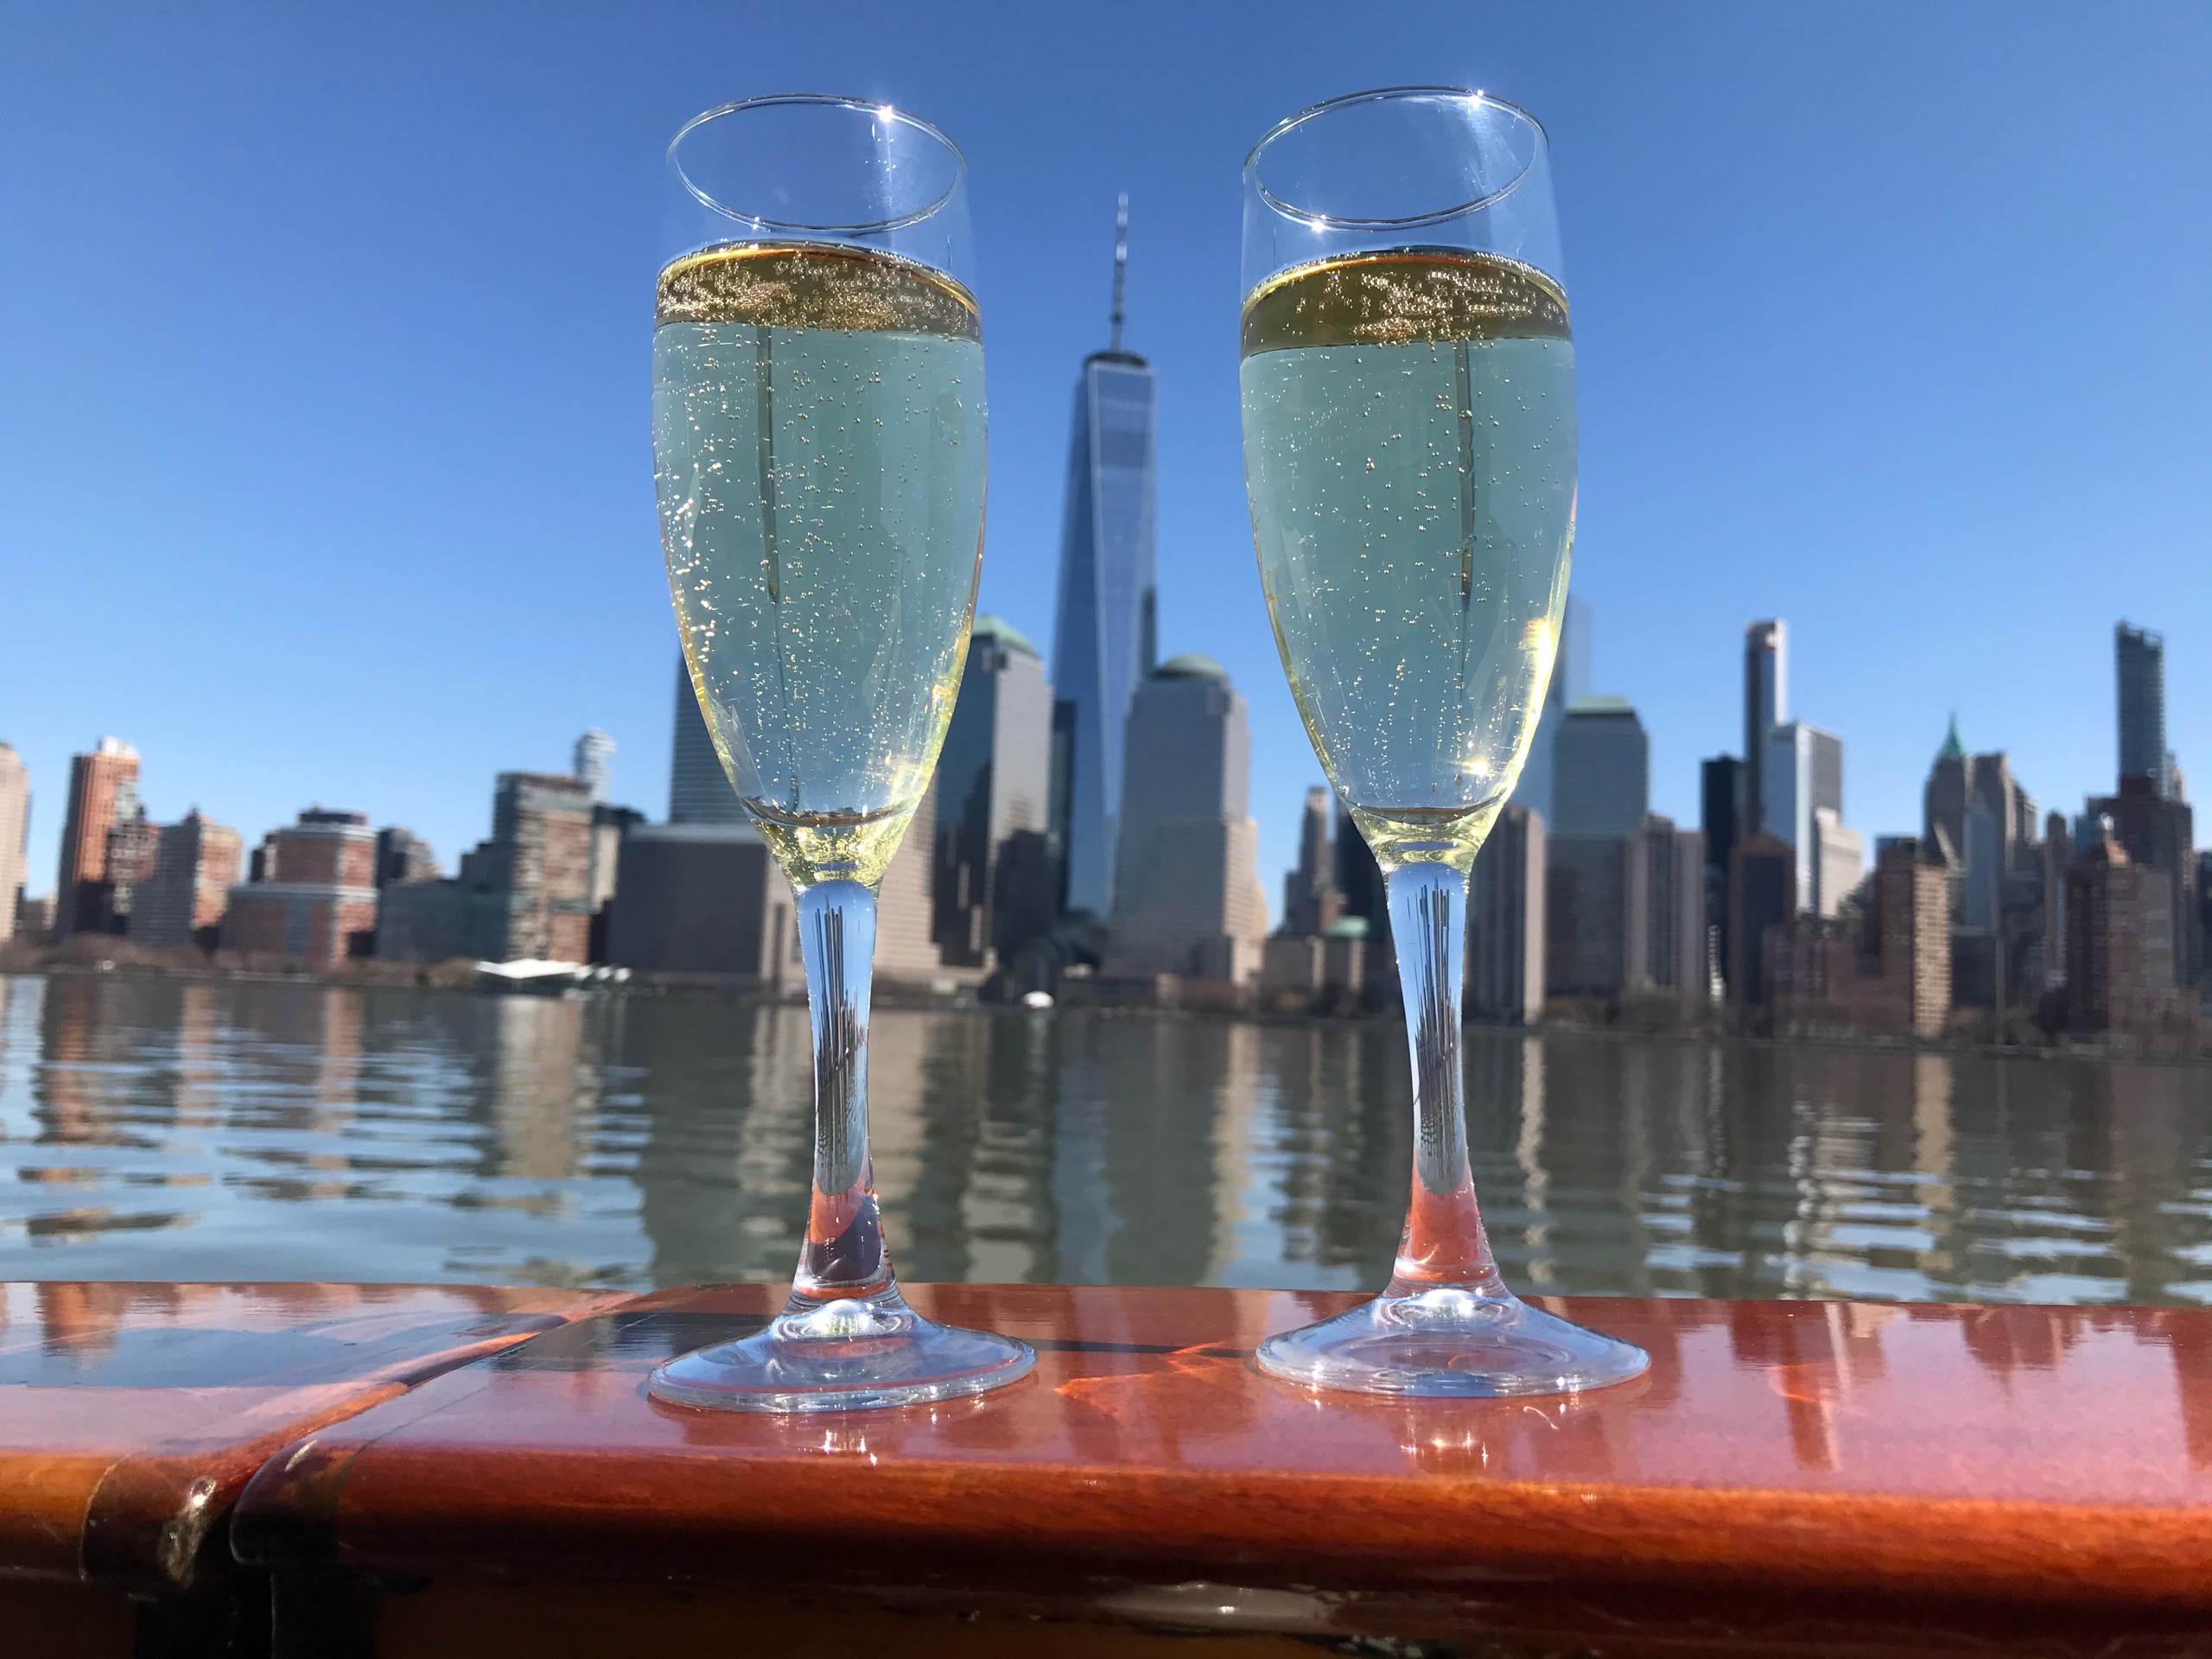 Valentine's Day Champagne Cruise in New York